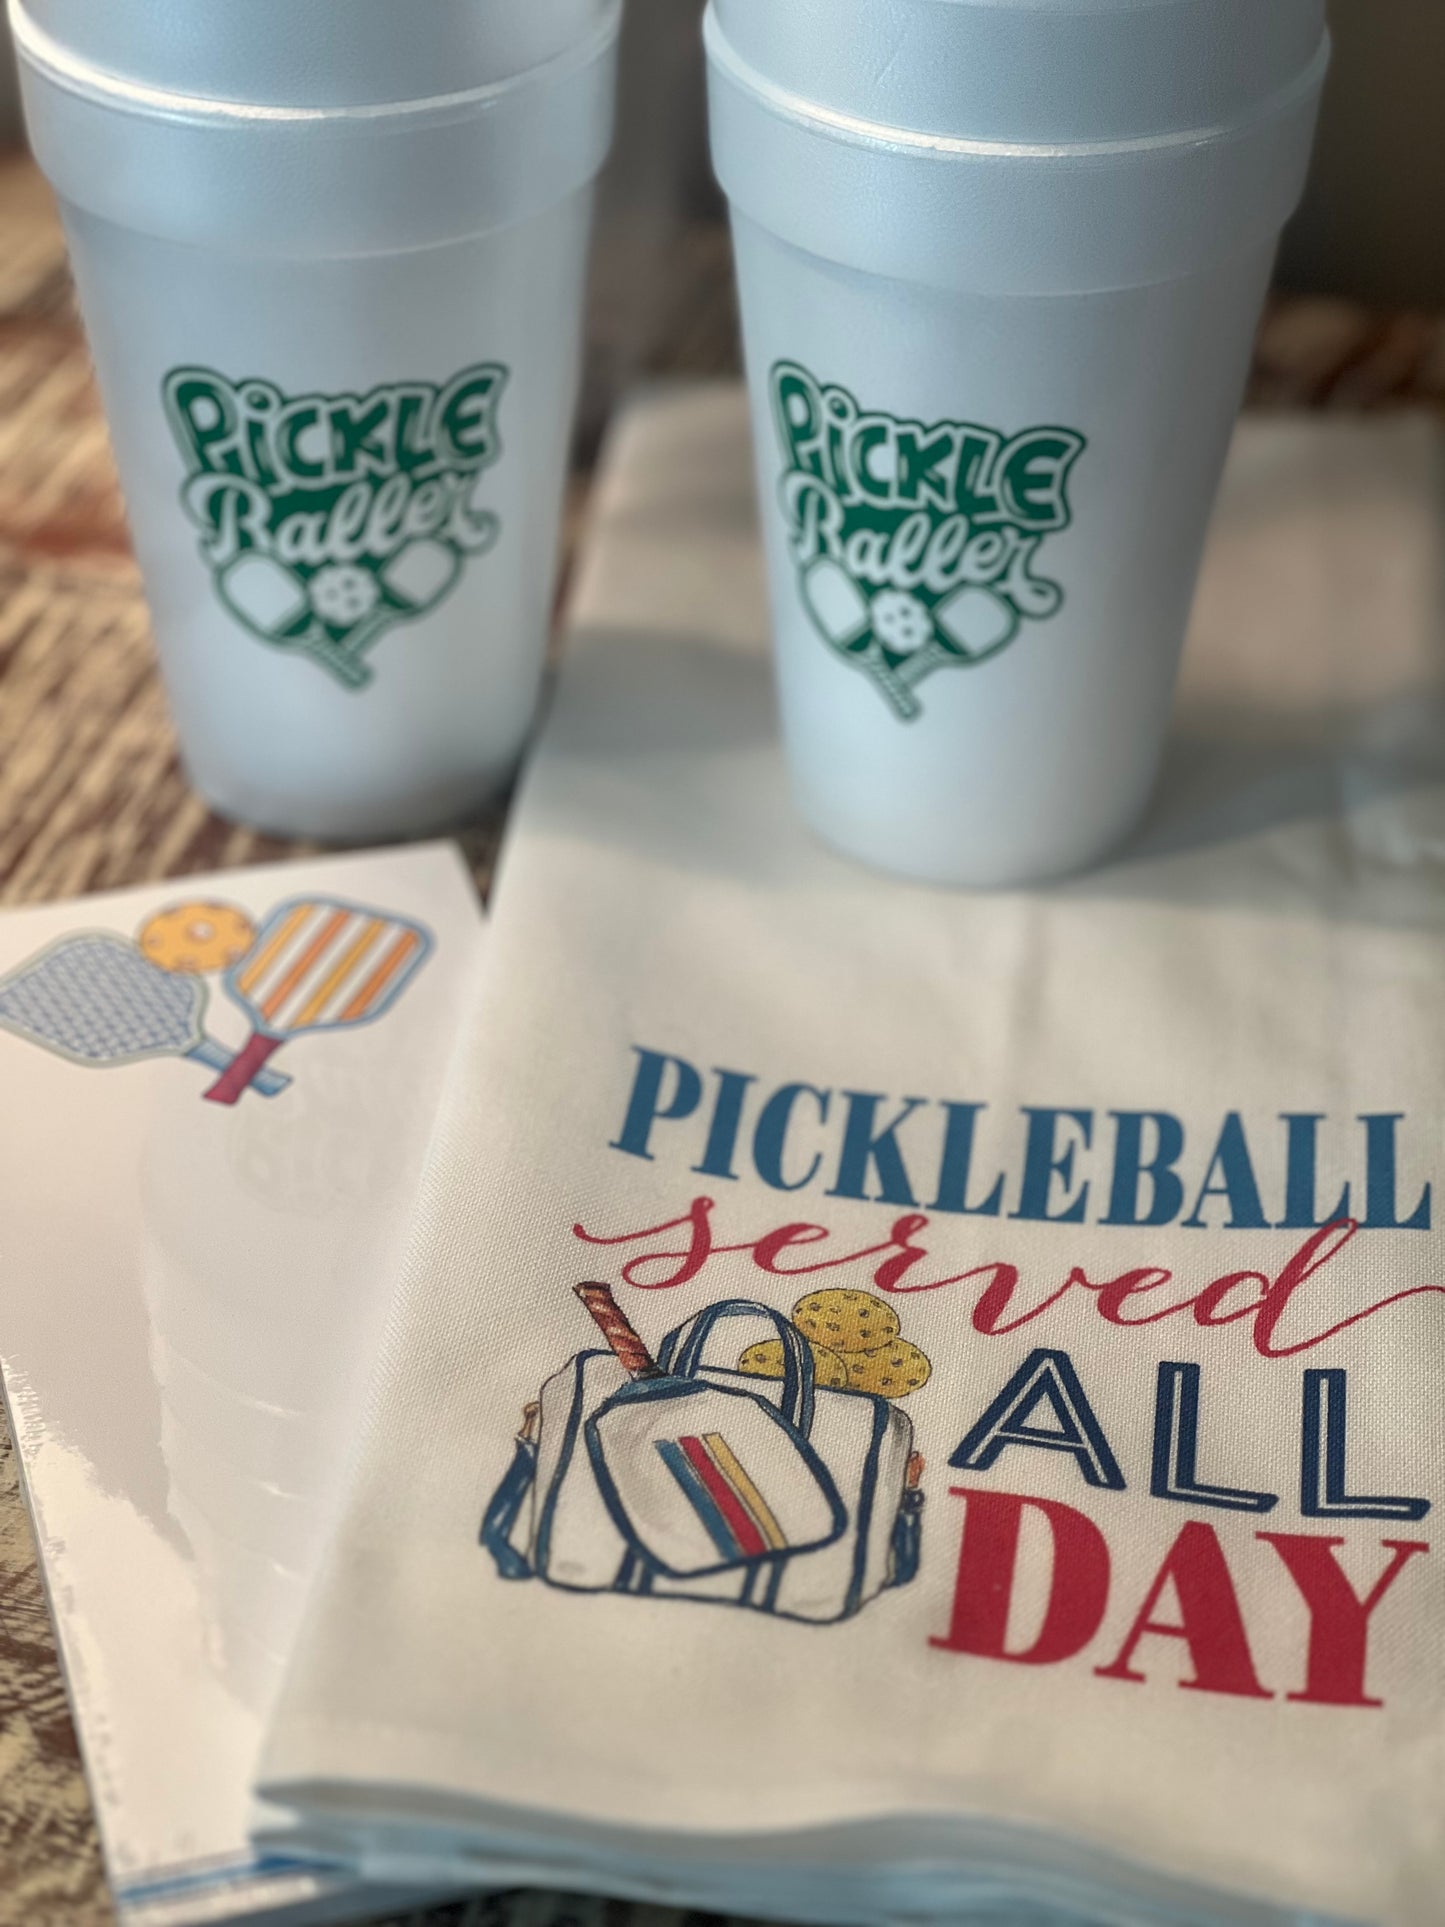 Pickleball Served All Day Tea Towel